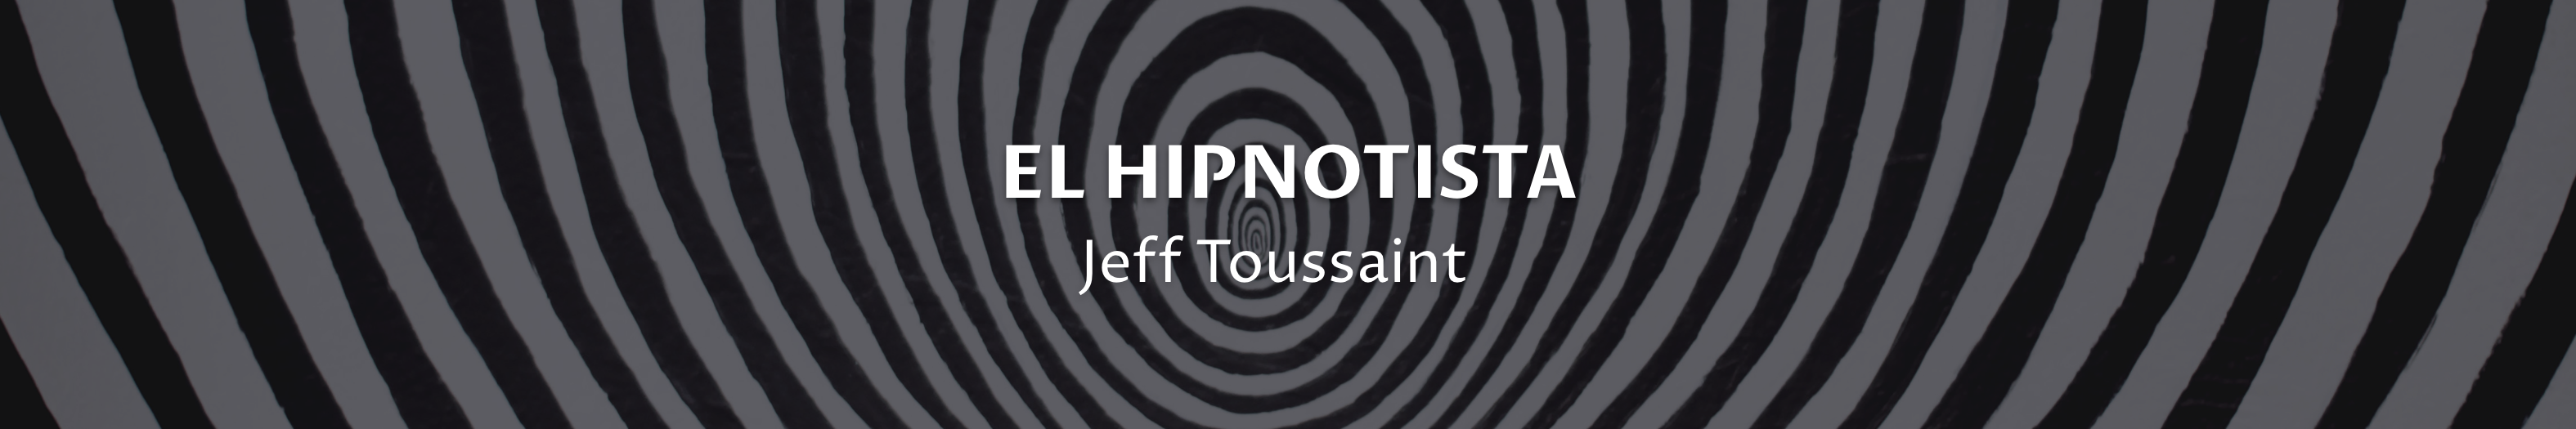 El Hipnotista